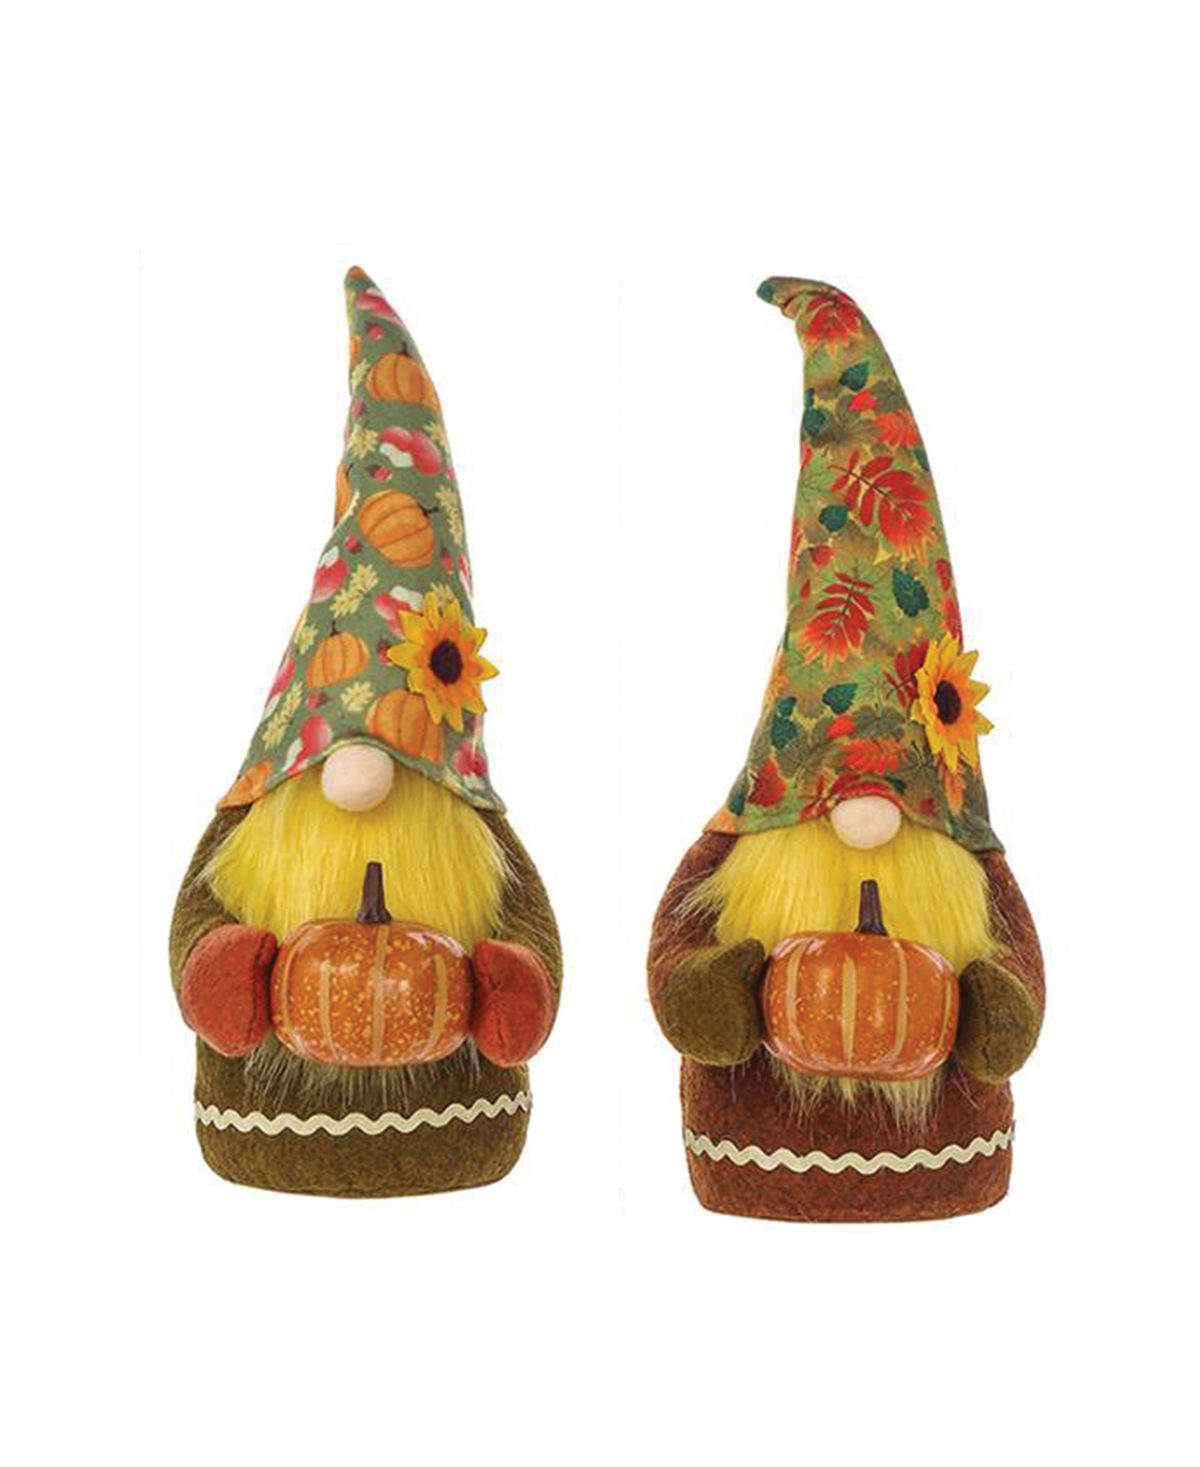 13.5" Fall Harvest Gnomes, Set of 2 - Multi